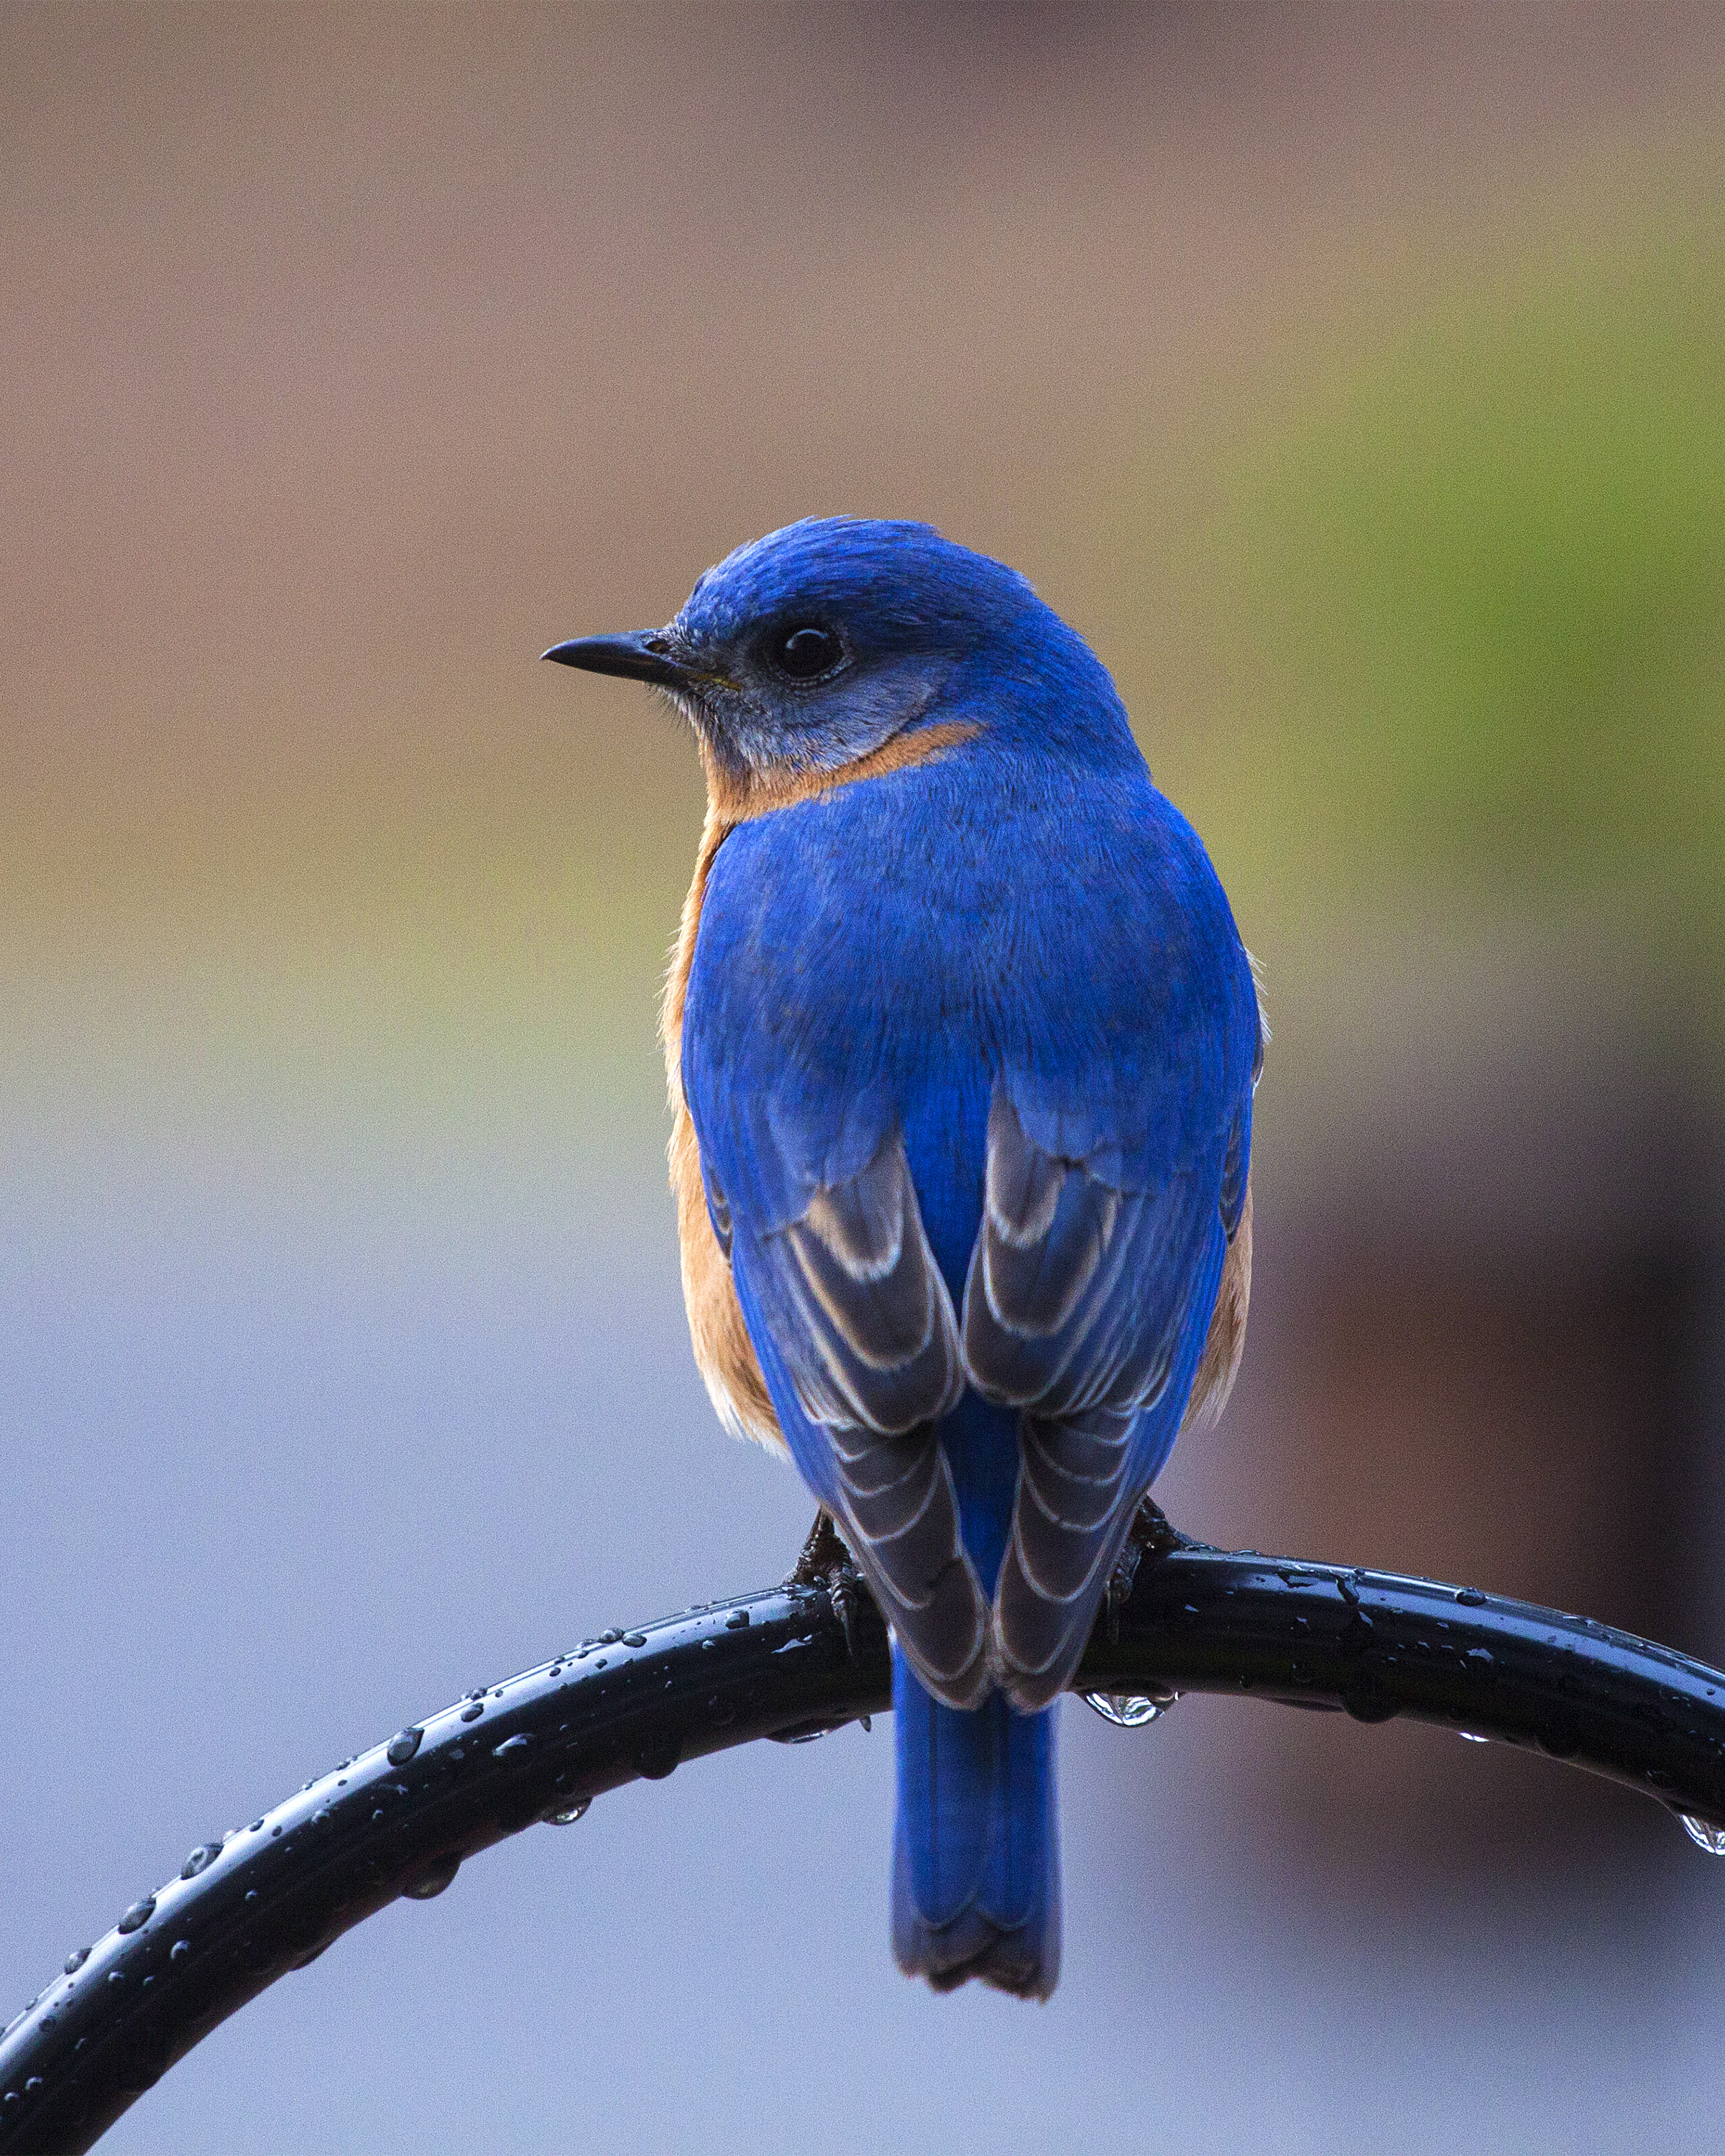 Blue bird image